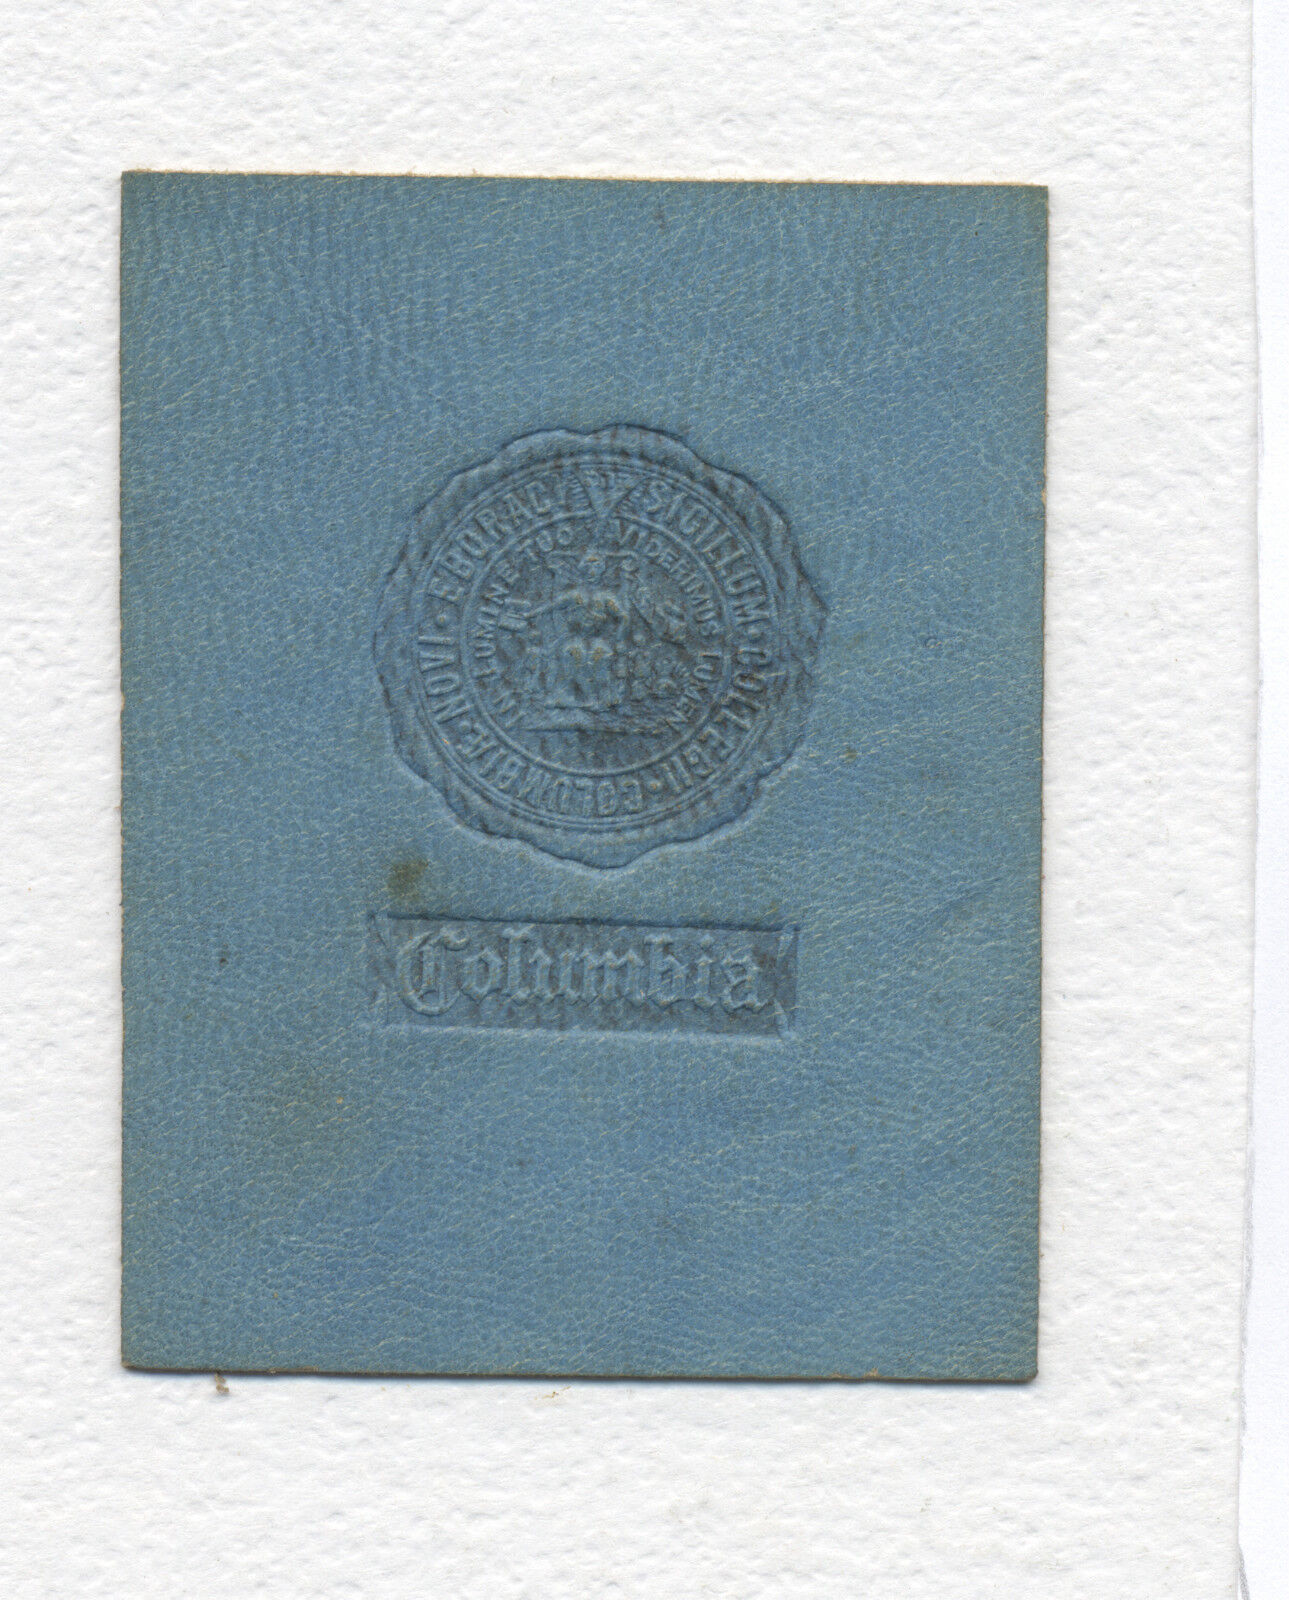 1912 COLUMBIA UNIVERSITY COLLEGE BLUE LEATHER TOBACCO PREMIUM L-20 SERIES